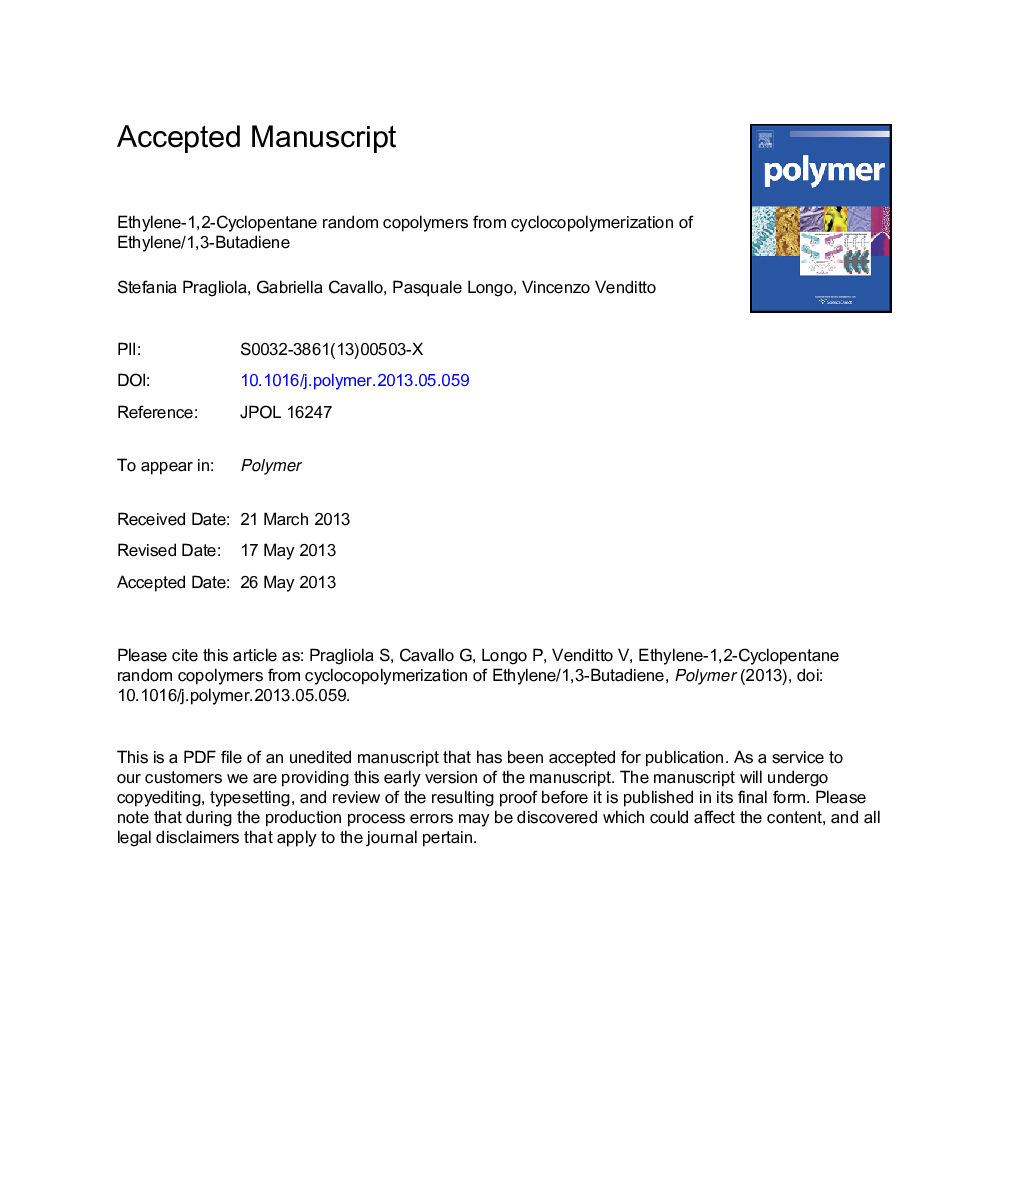 Ethylene-1,2-cyclopentane random copolymers from cyclocopolymerization of ethylene/1,3-butadiene